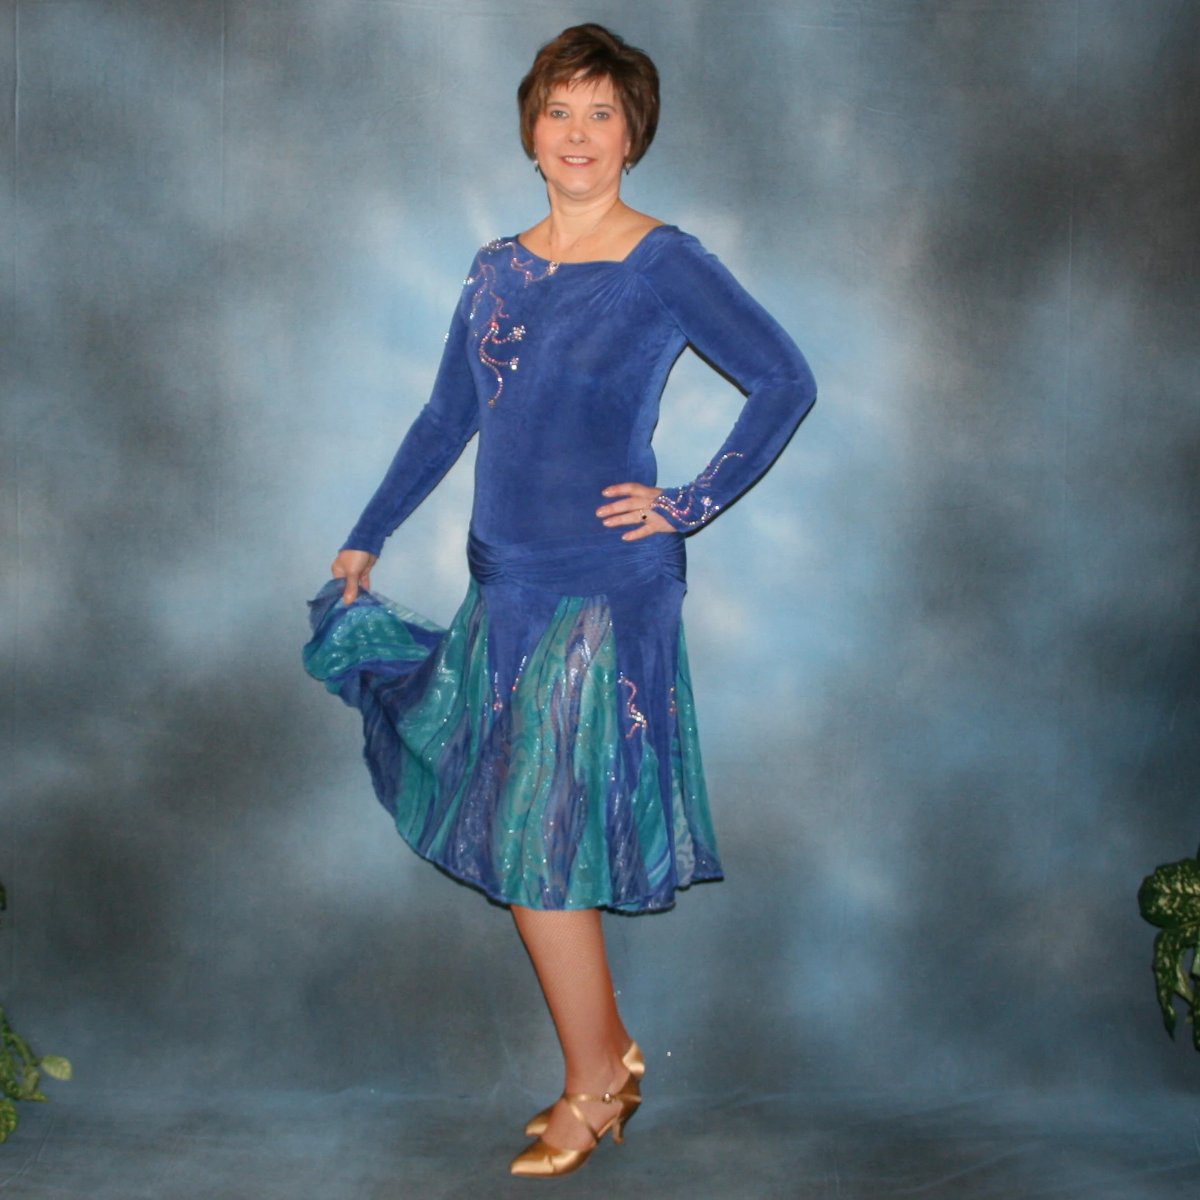 Crystal's Creations Blue Latin/rhythm/ballroom dress created in sea blue luxurious solid slinky & iridescent shades of blue print chiffon is a converta ballroom dress